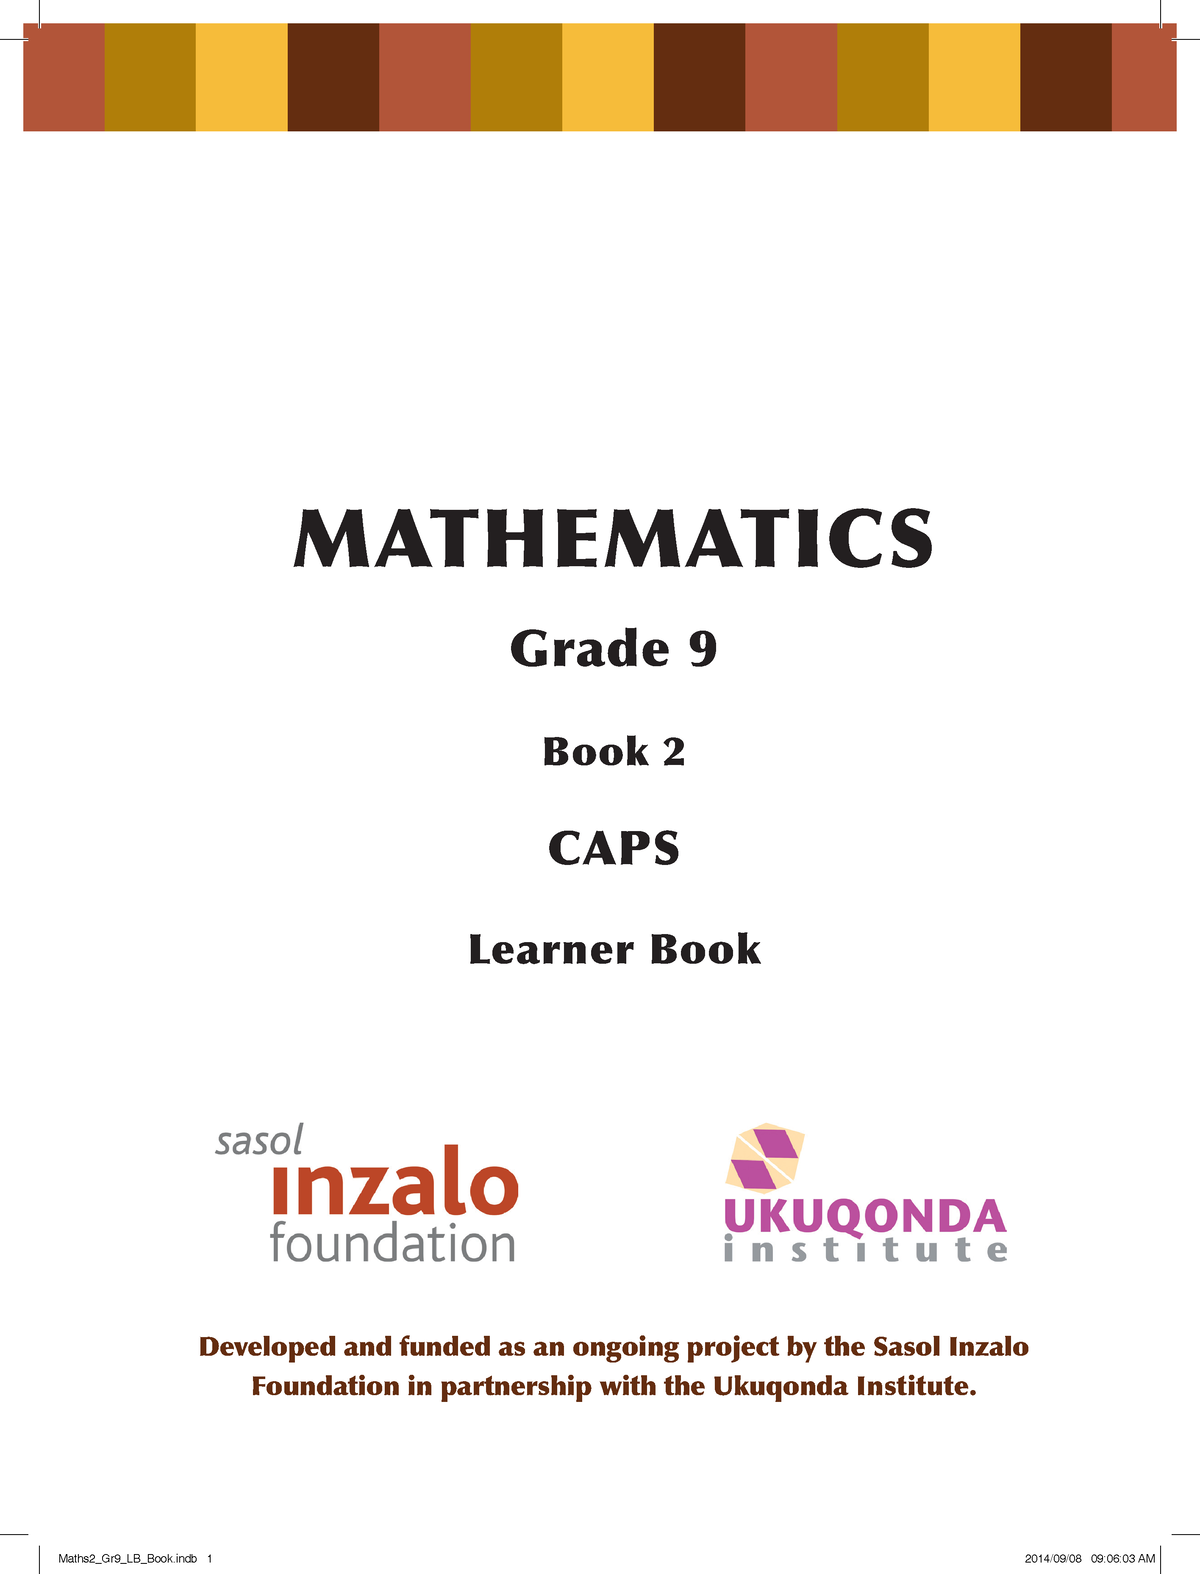 math-9-workbook-mathematics-grade-9-book-2-caps-learner-book